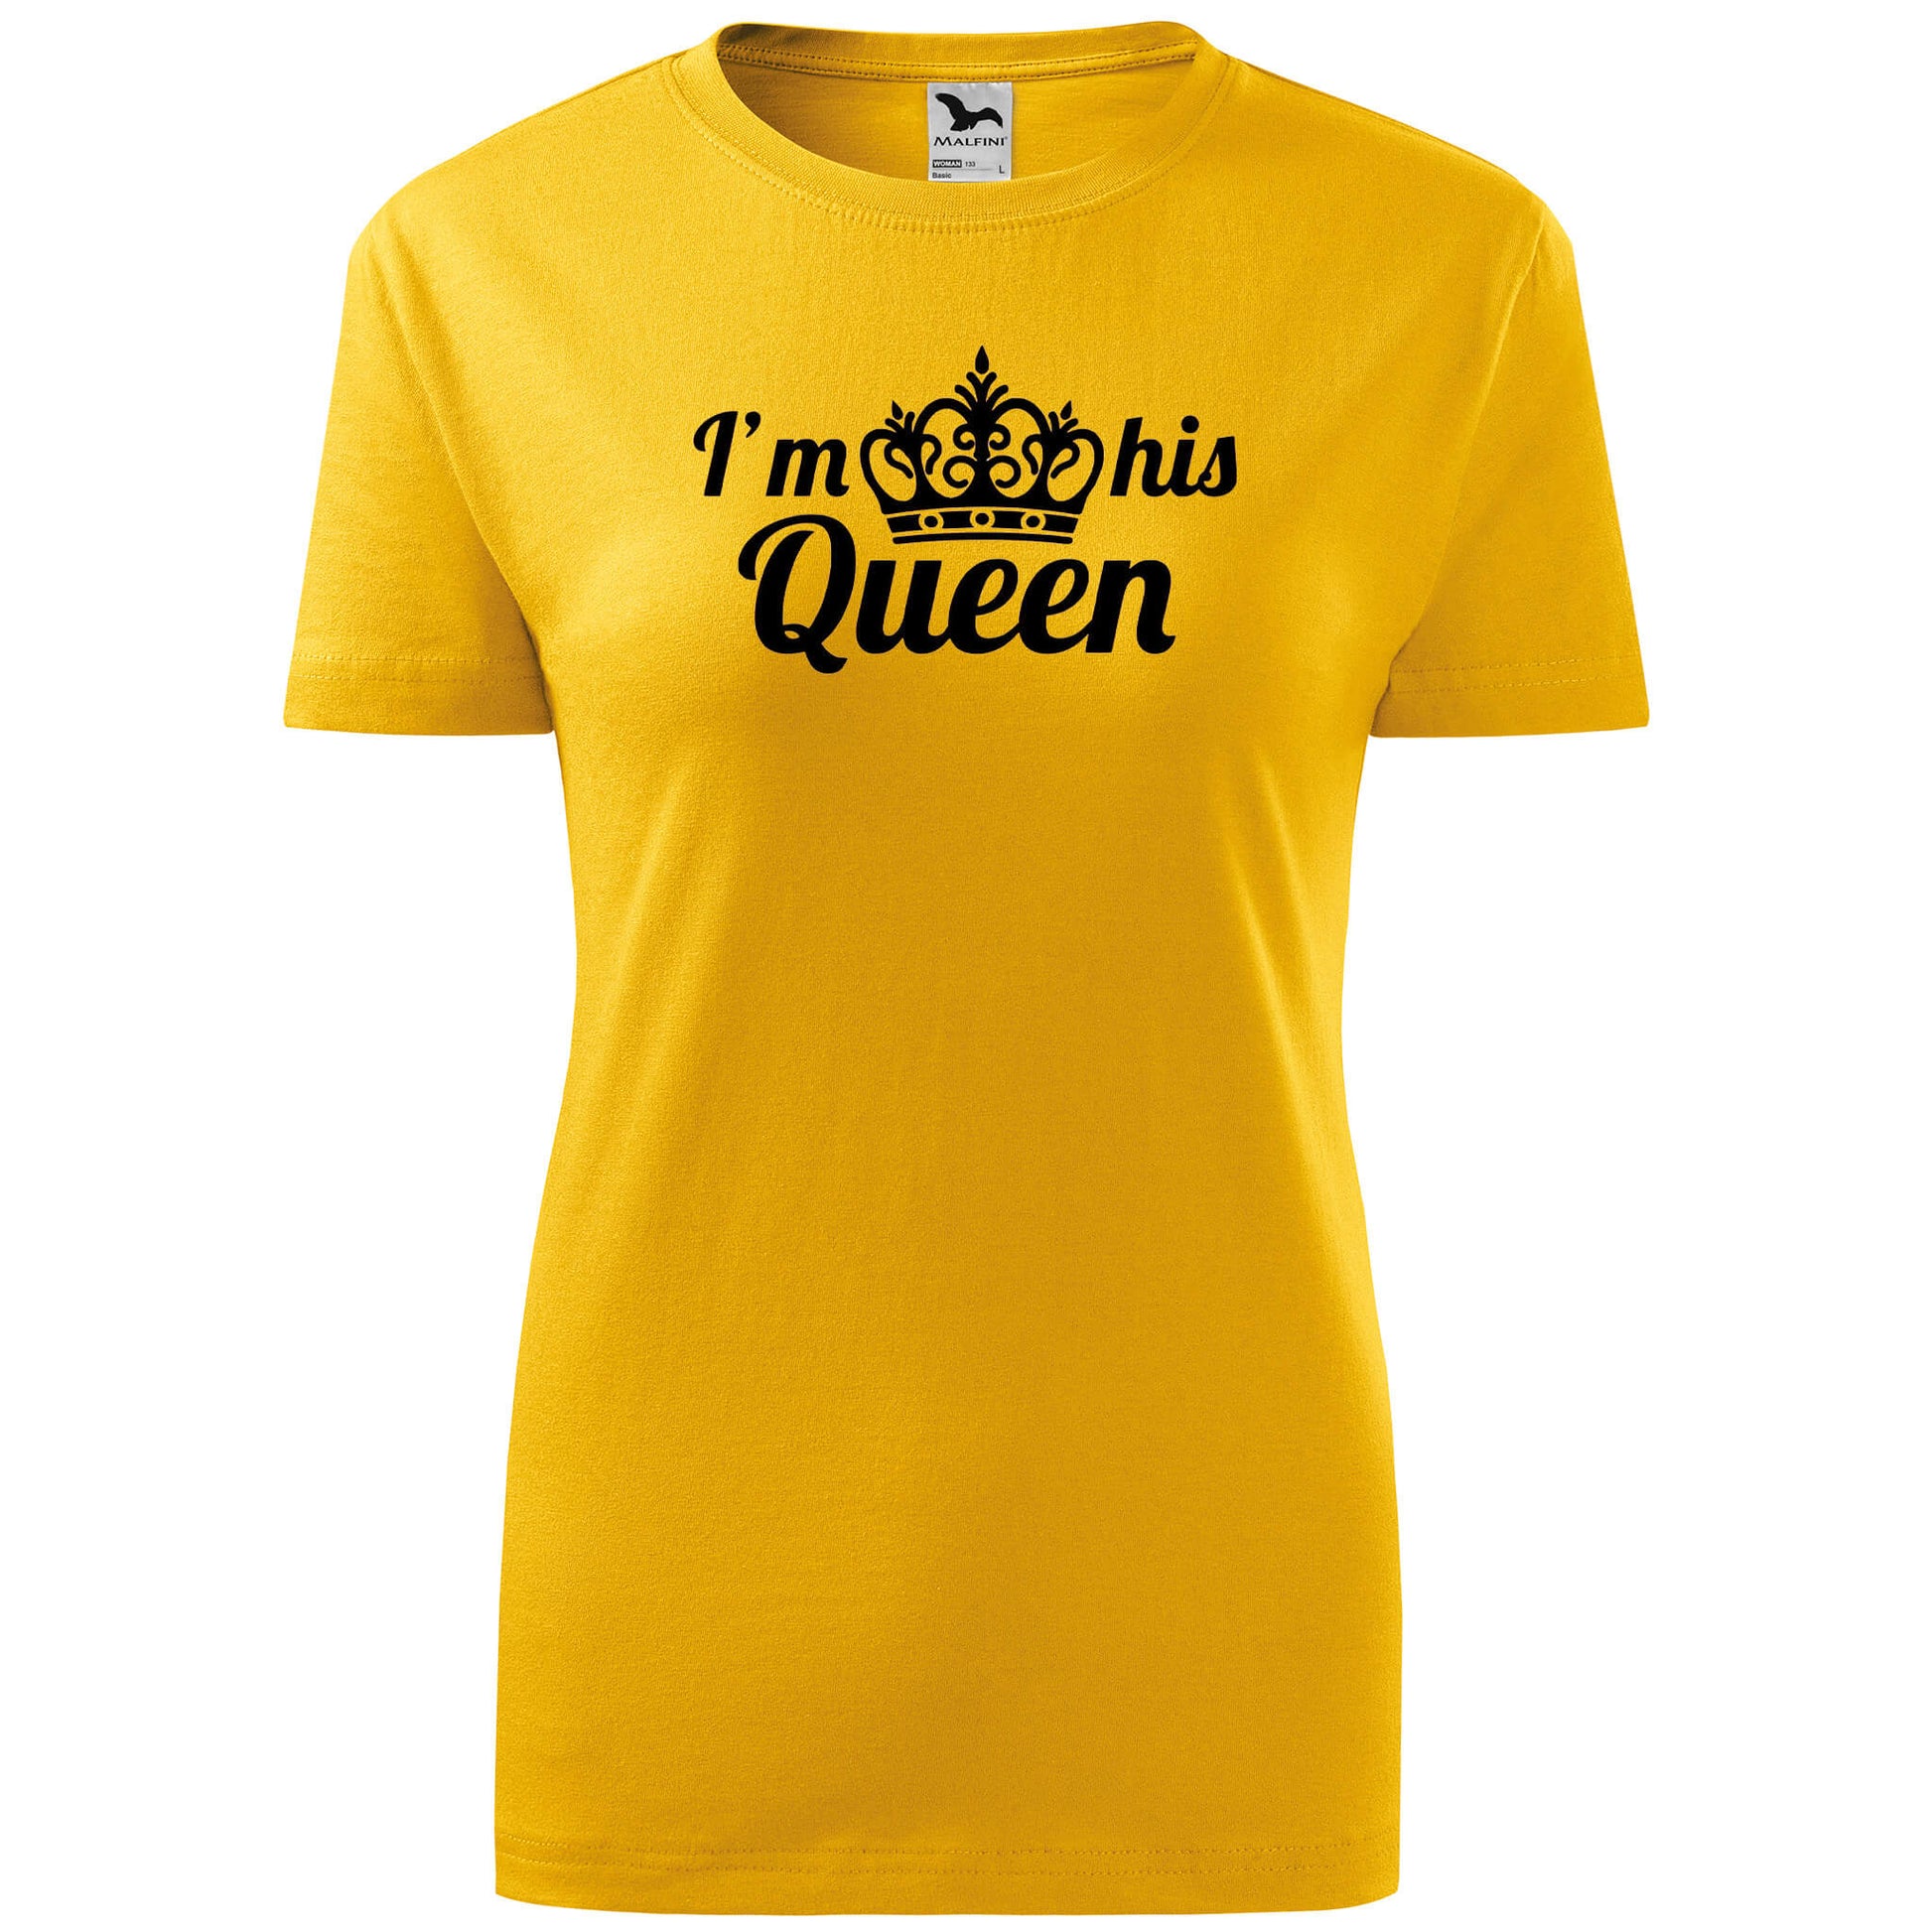 T-shirt - I'm his queen - rvdesignprint